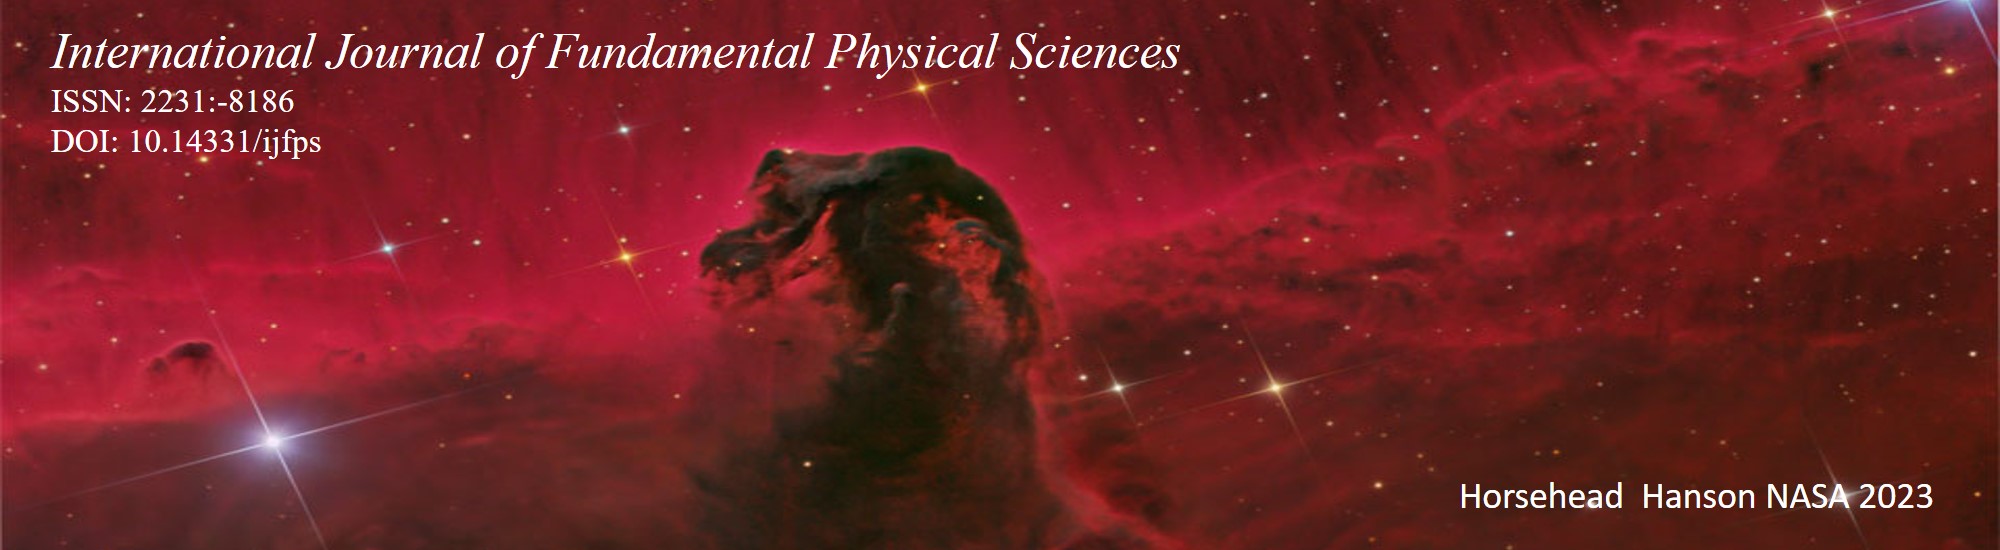 International Journal of Fundamental Physical Sciences